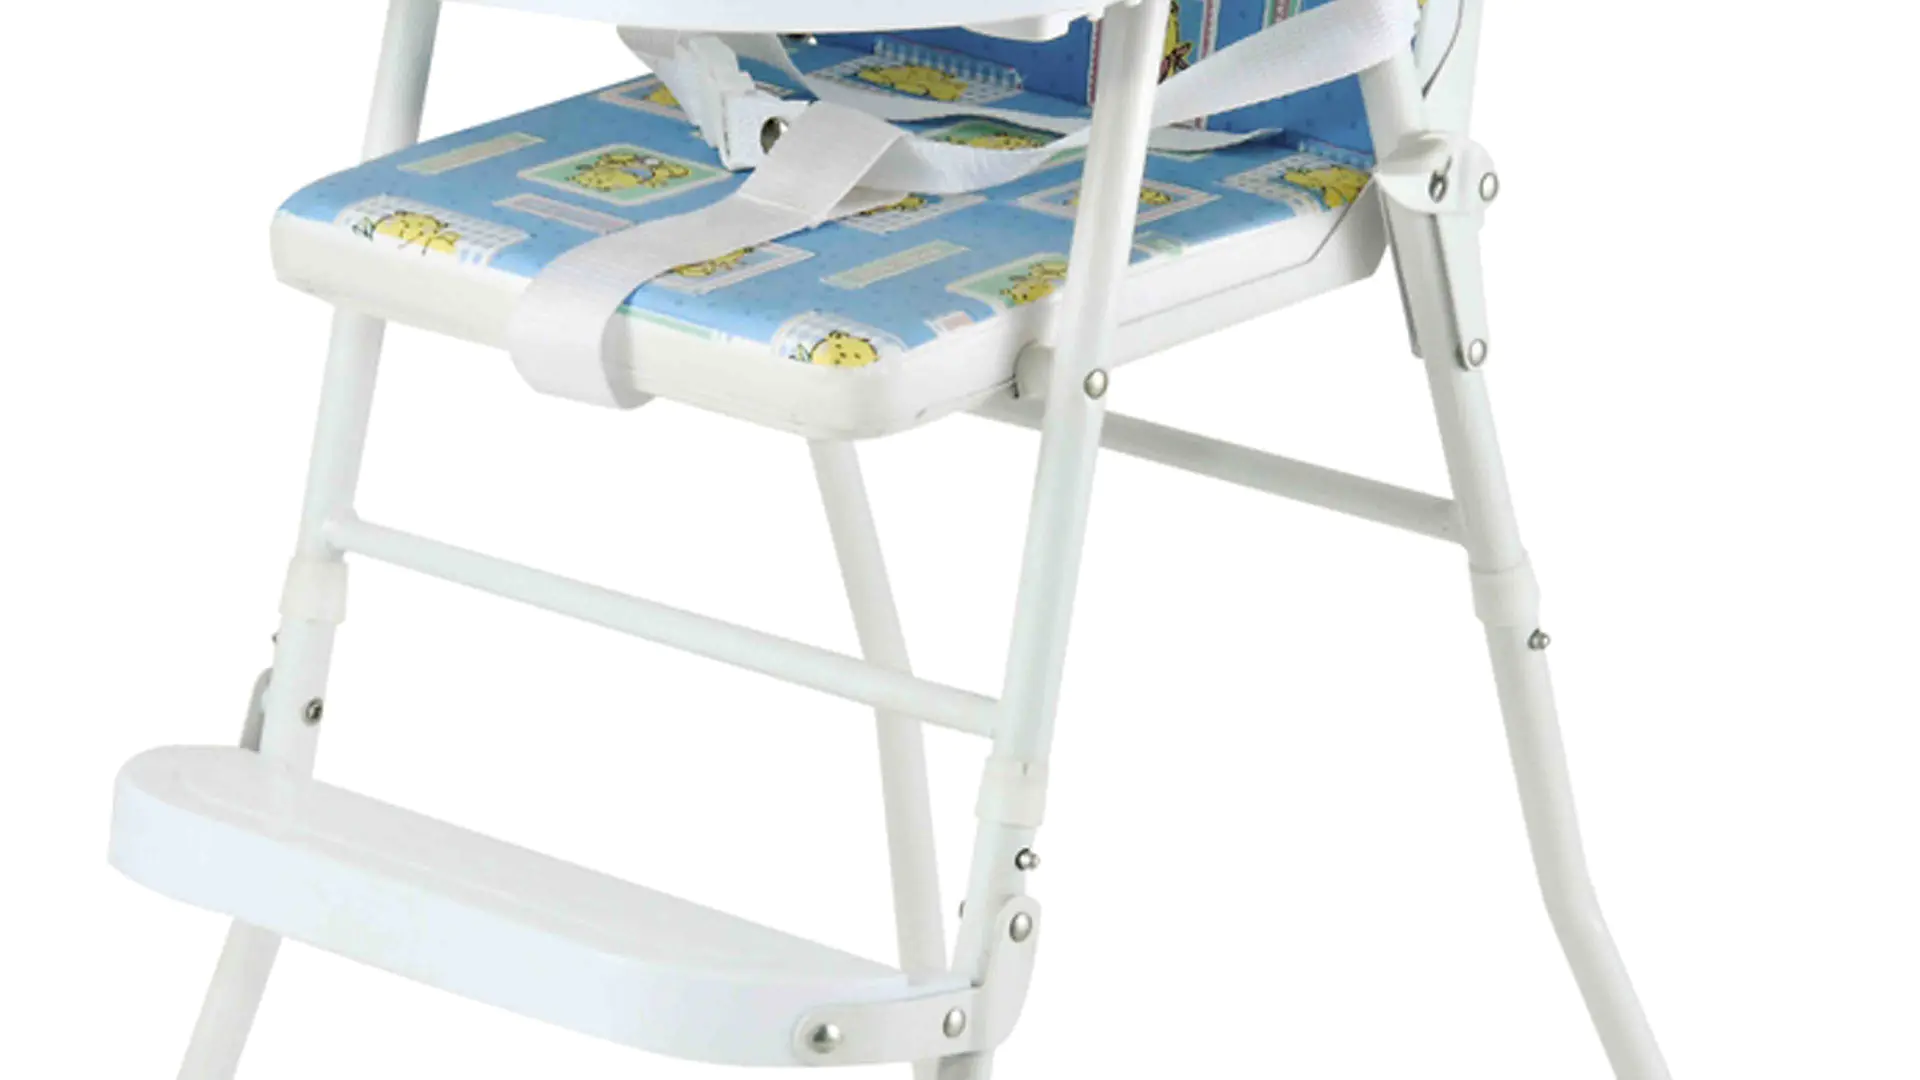 portable Custom adjustable child high chair musical Aoqi